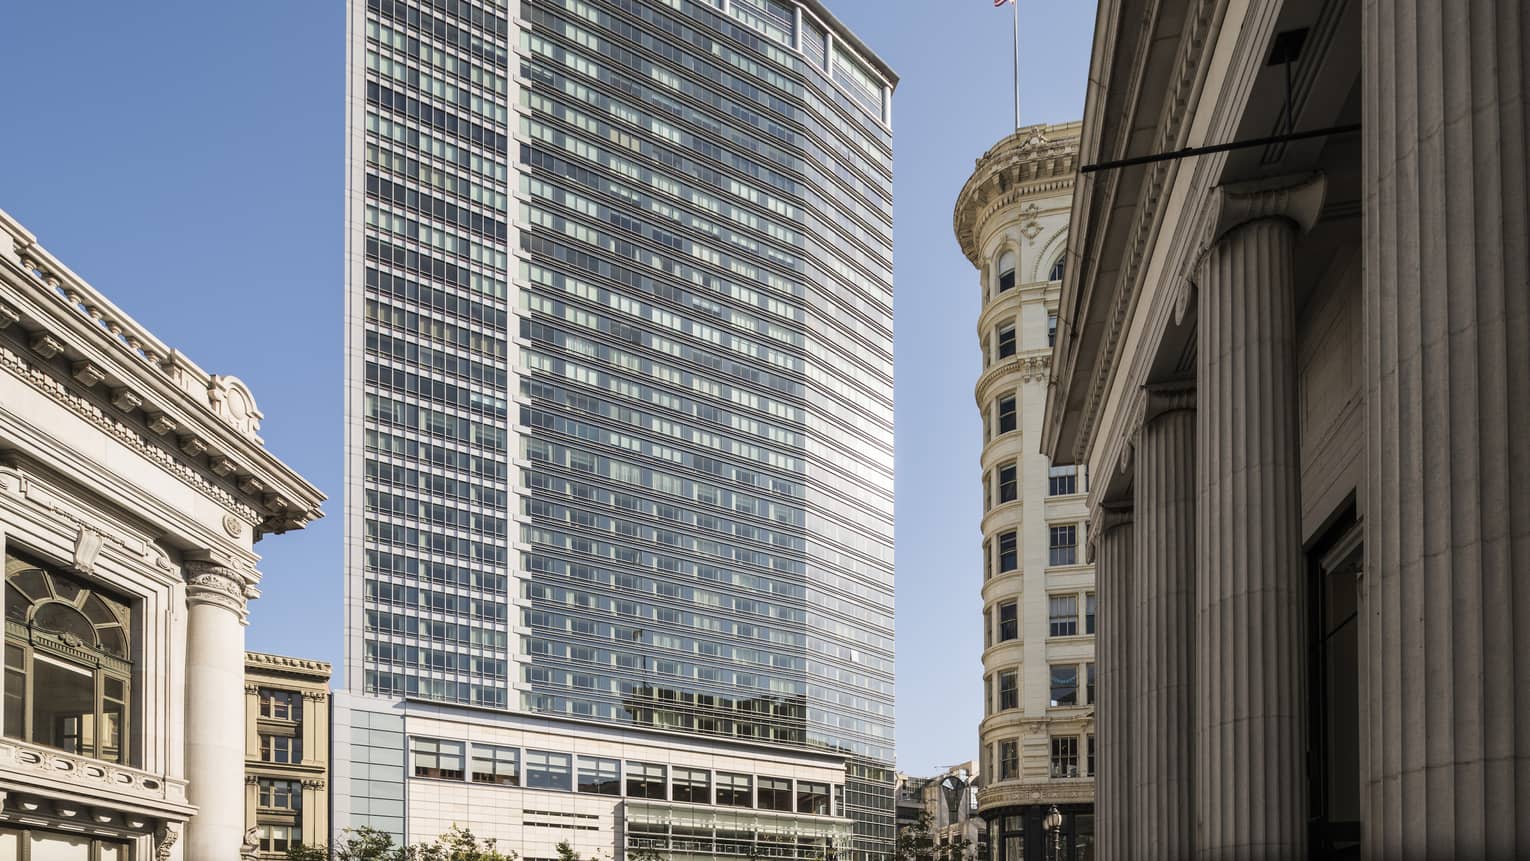 Four Seasons Hotel San Francisco glass high rise building exterior against blue sky 